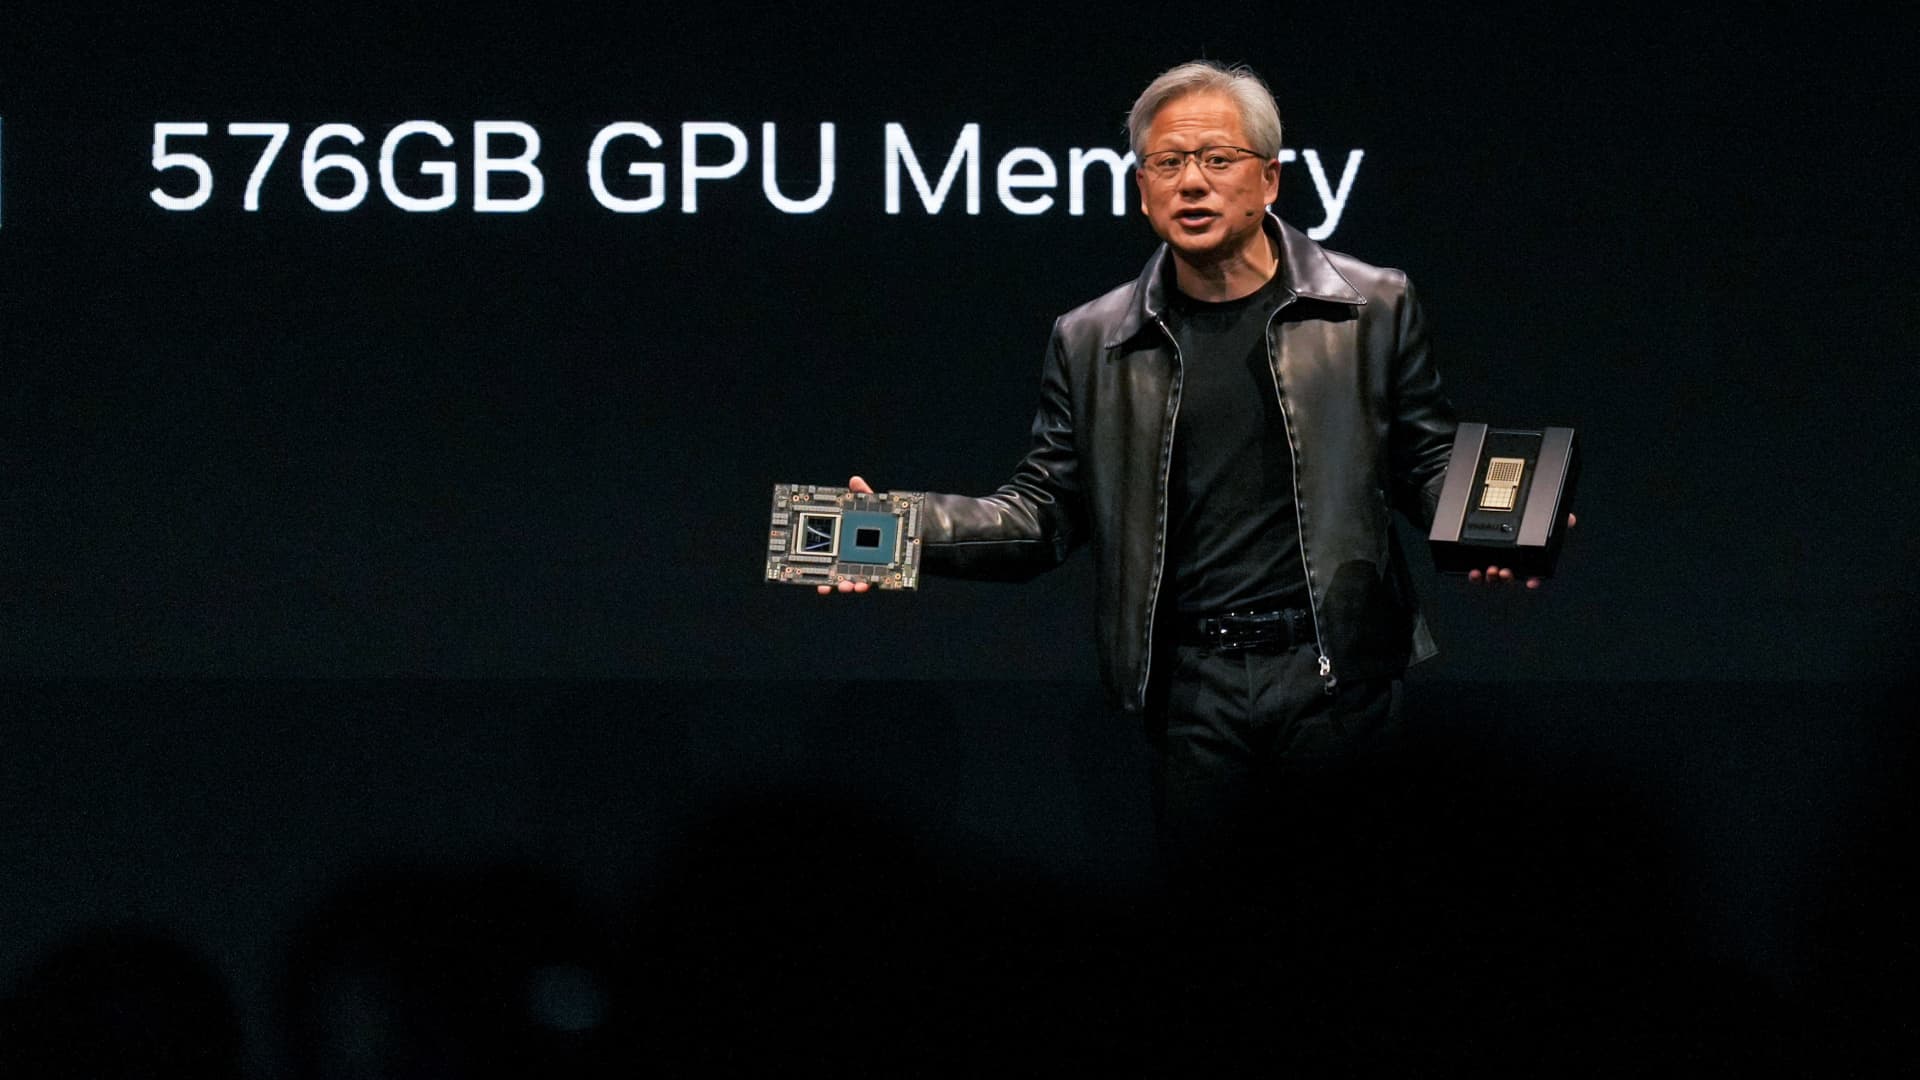 Nvidia’s stock closes at record after Google AI partnership